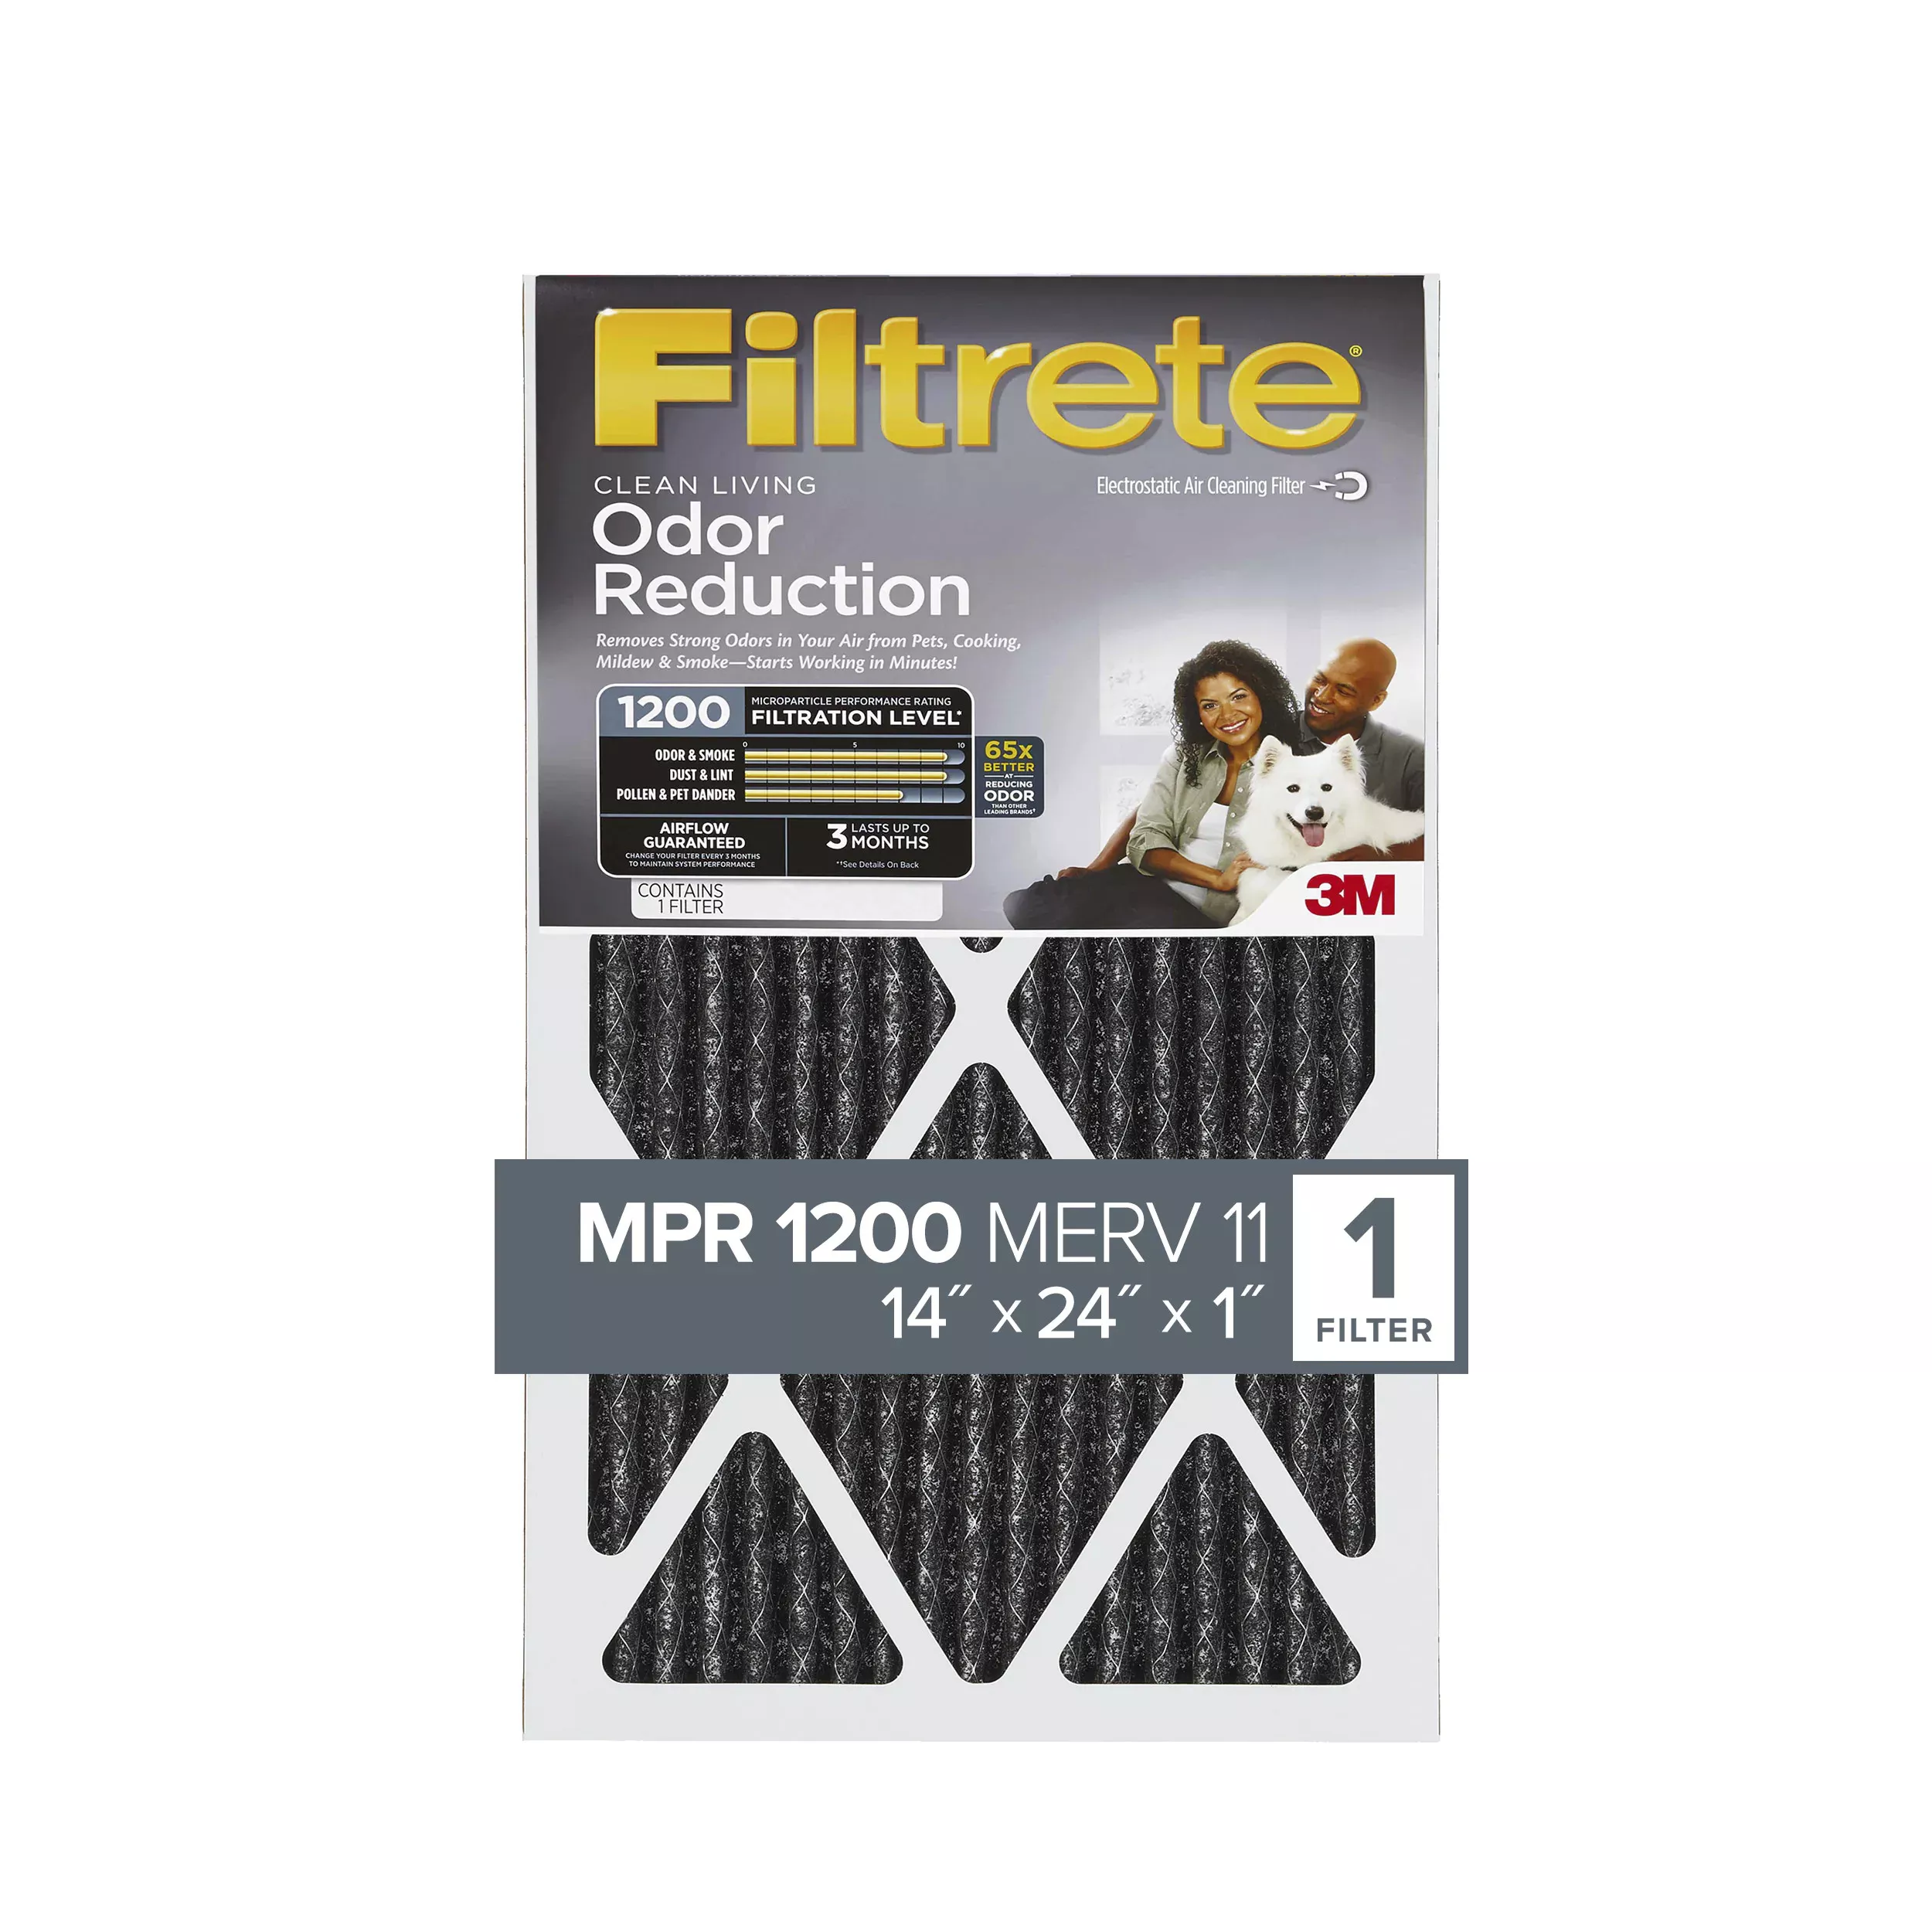 Filtrete™ Home Odor Reduction Filter HOME23-4, 14 in x 24 in x 1 in
(35.5 cm x 60.9 cm x 2.5 cm)